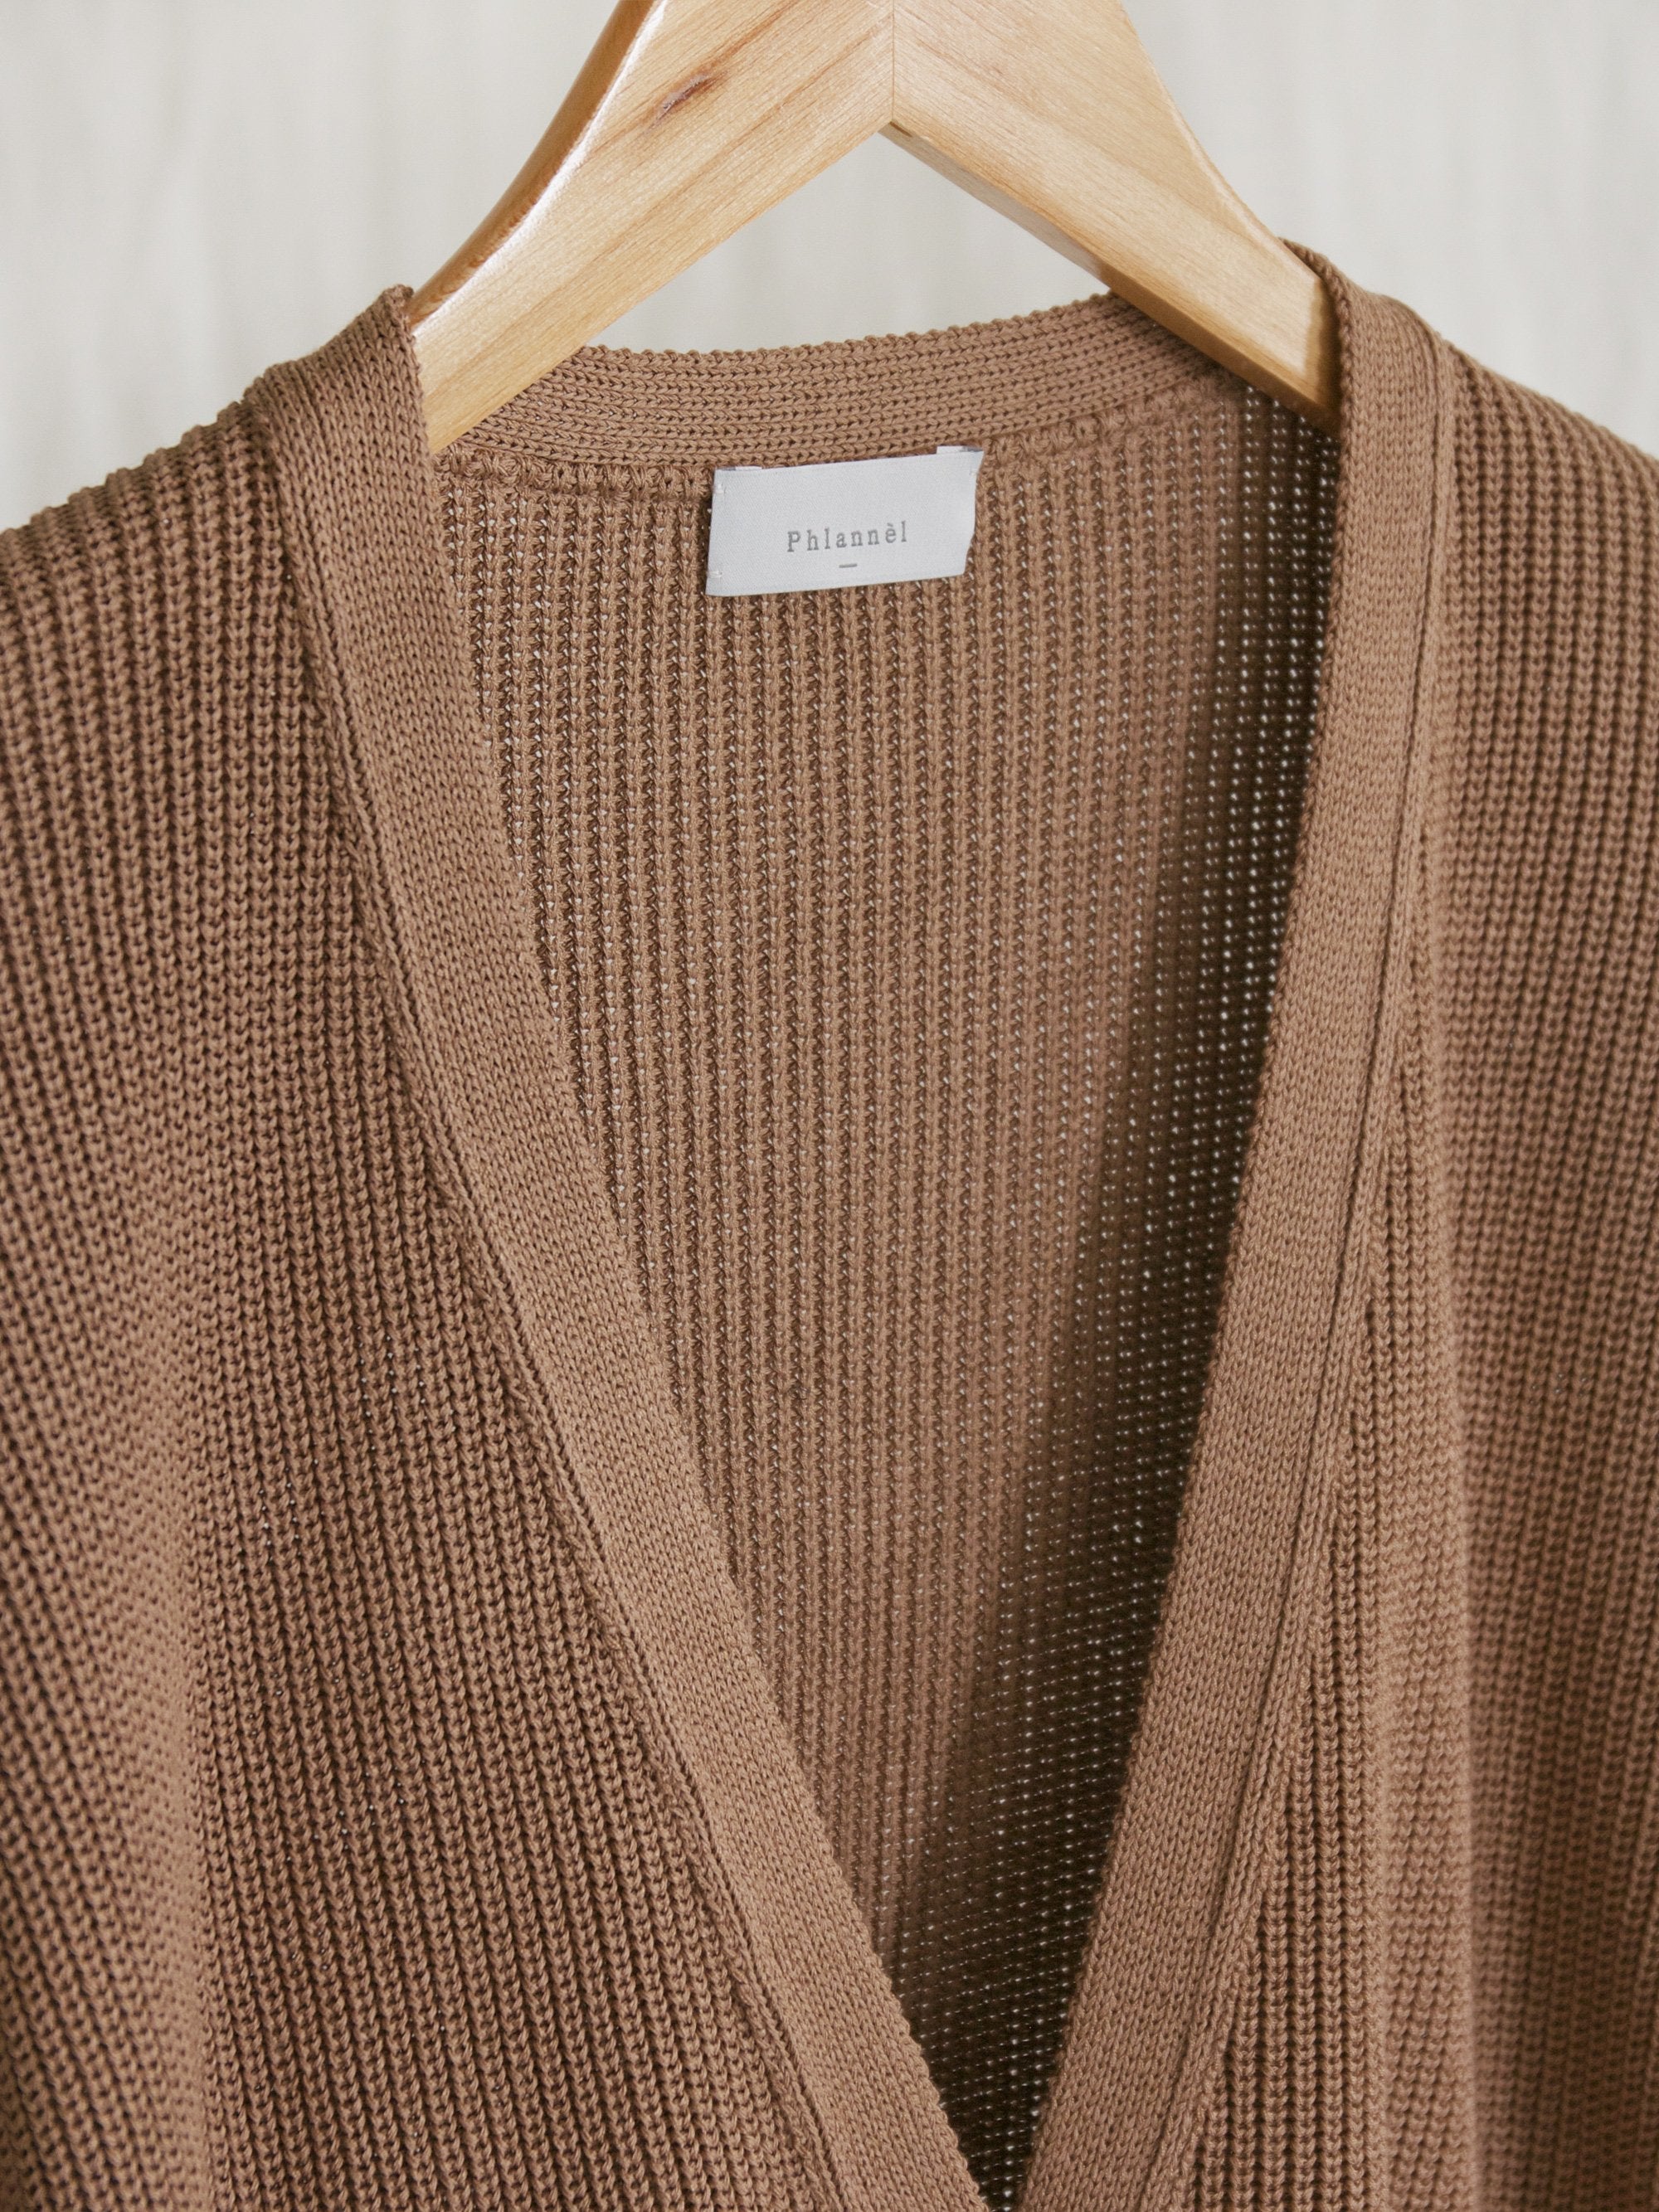 Namu Shop - Phlannel Washi Silk Belted Knit Cardigan - Almond